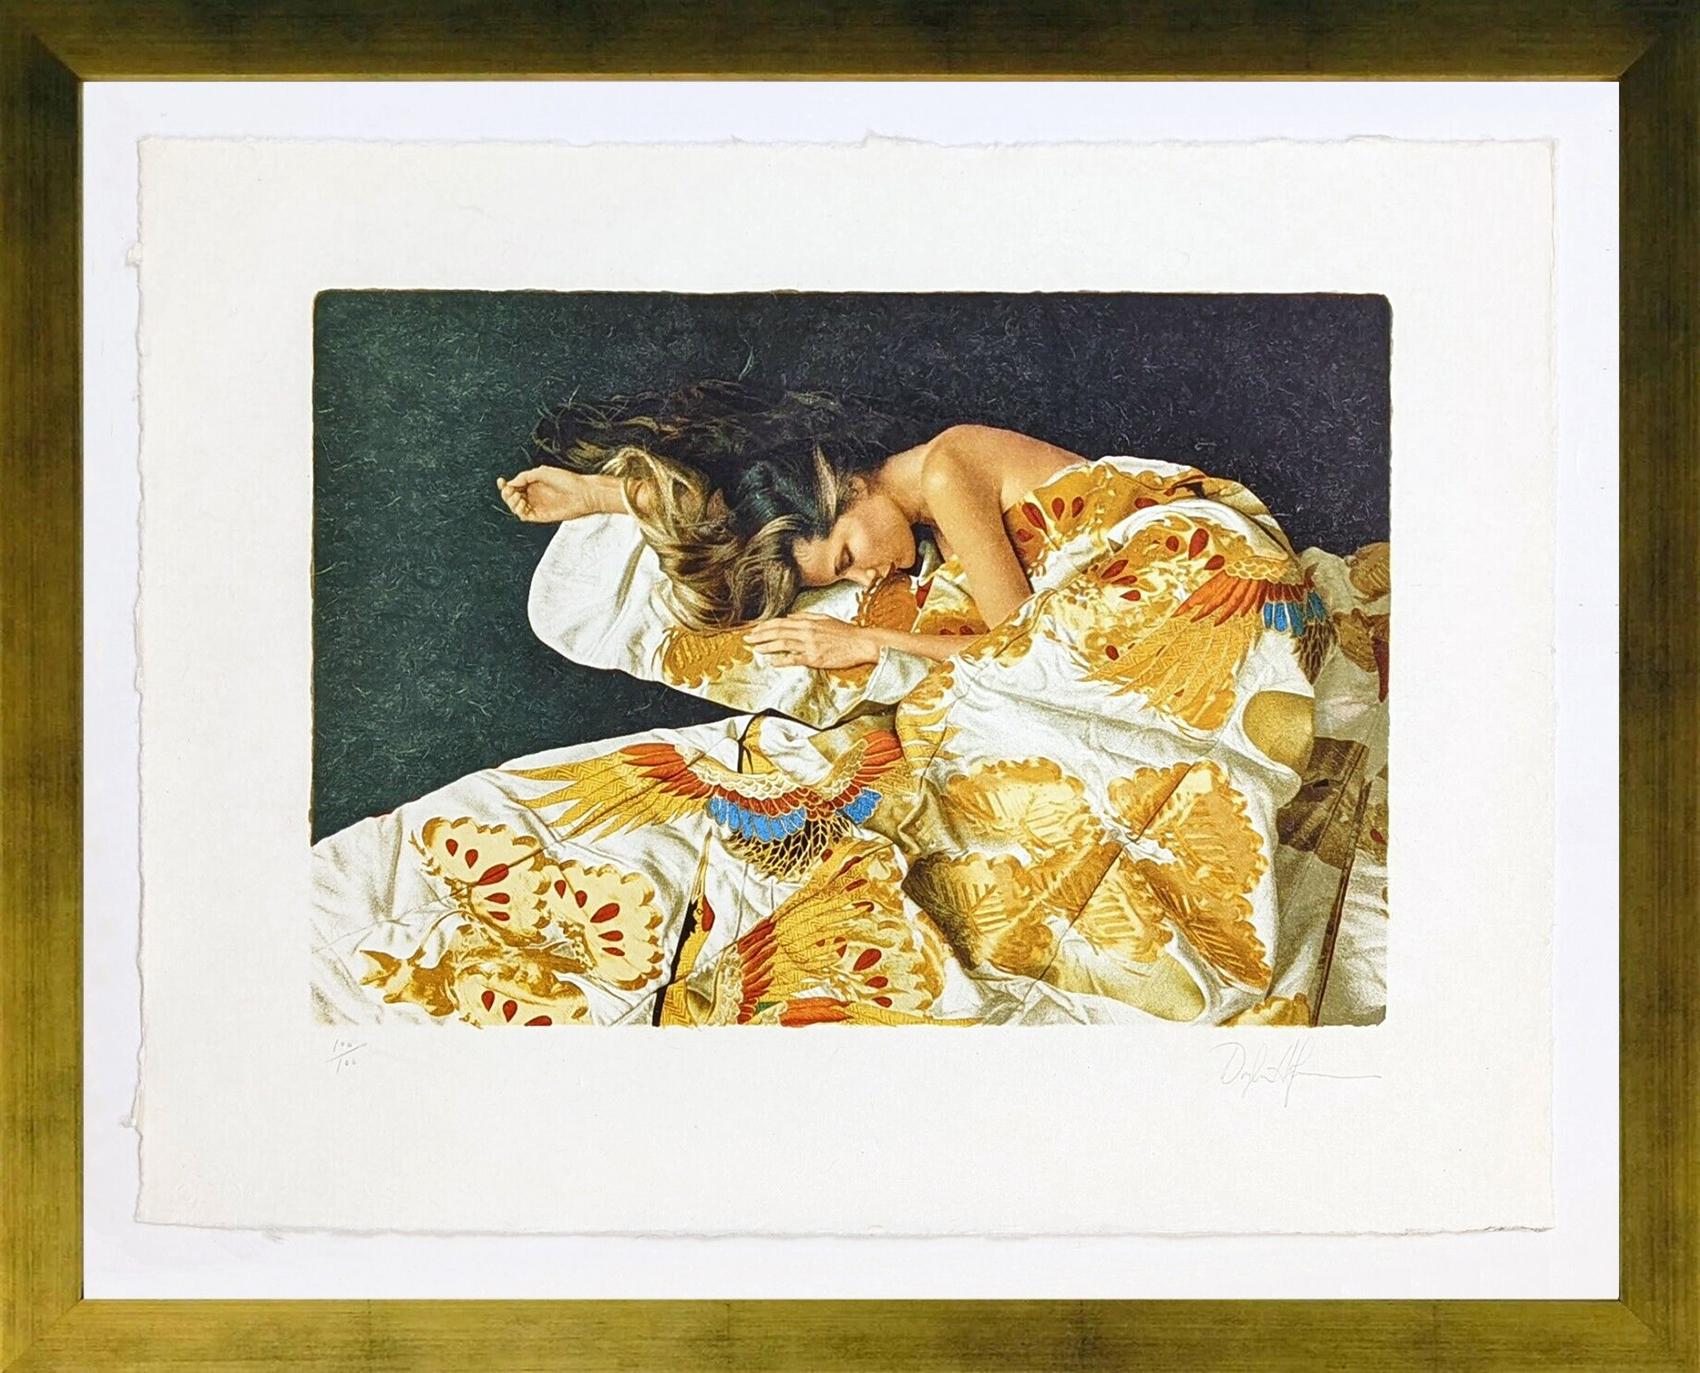 Douglas Hofmann Nude Print - GOLD AND SILK